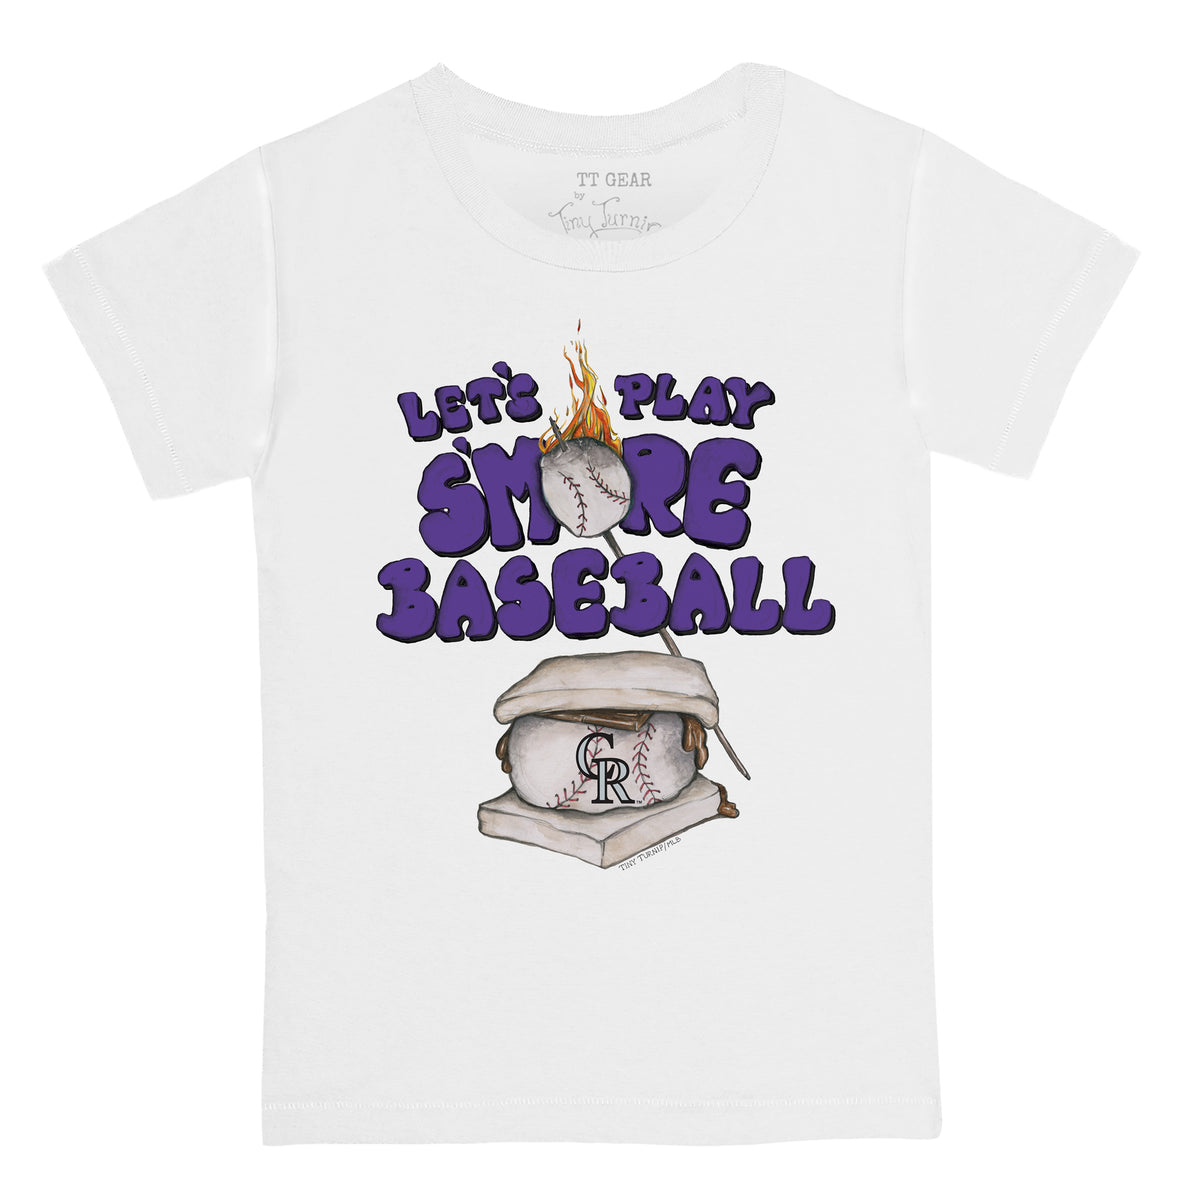 Colorado Rockies Let's Play Baseball Together Snoopy MLB Shirt 